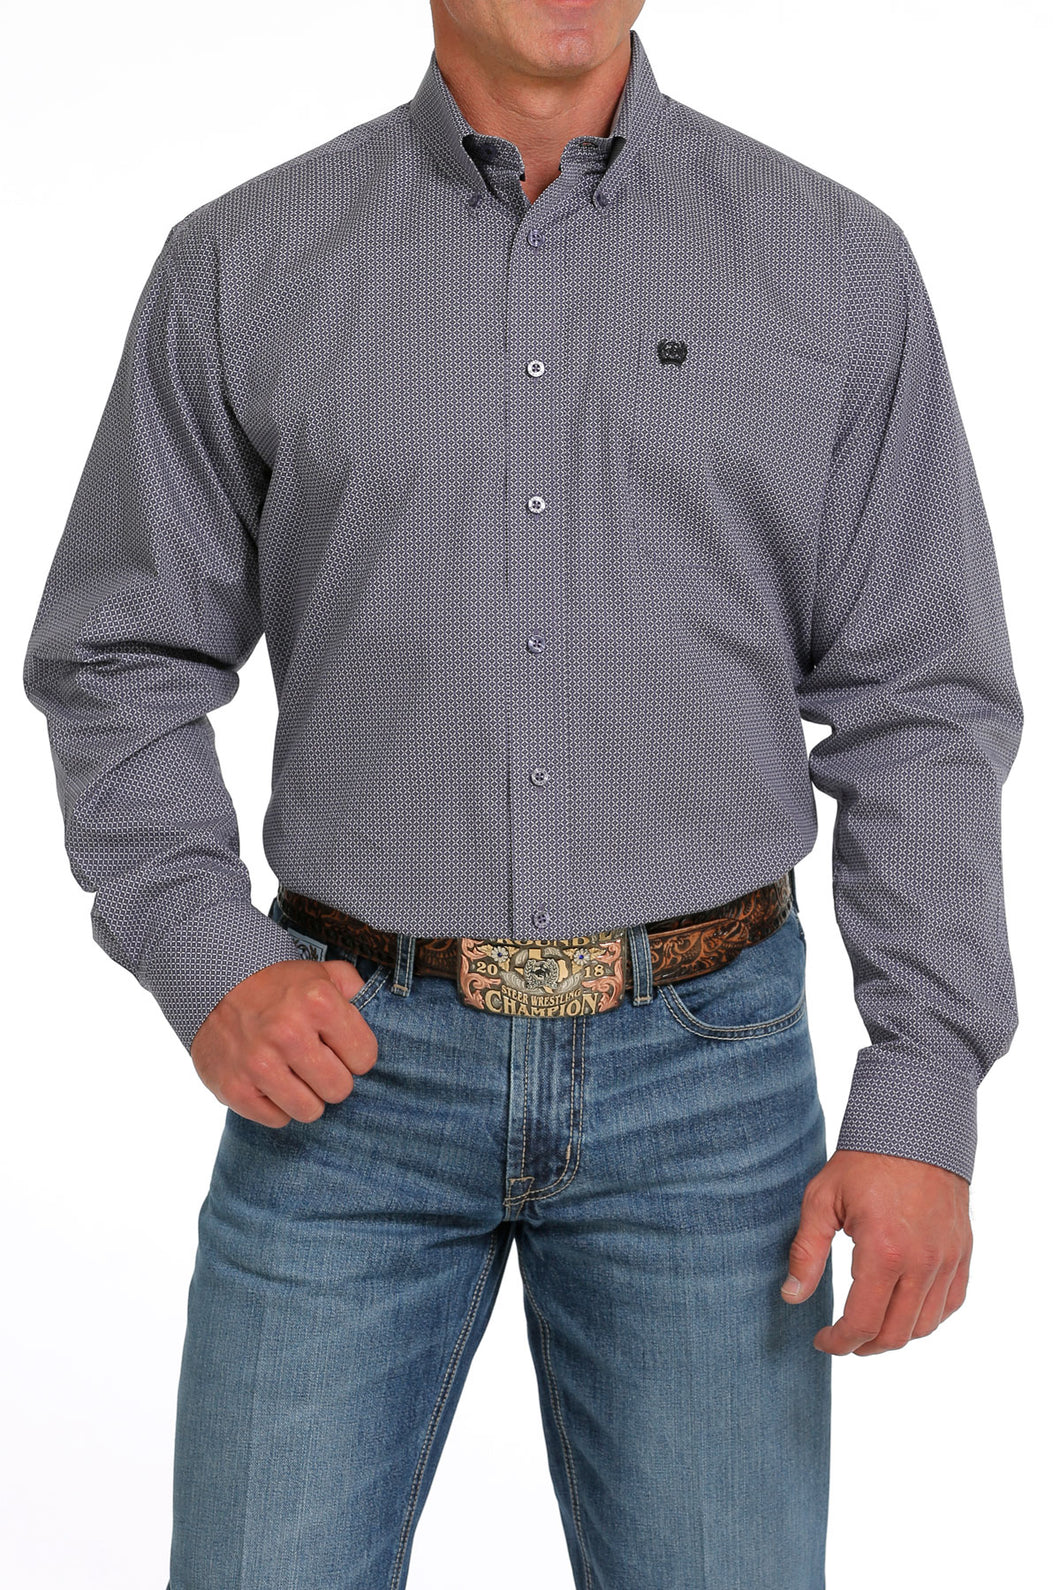 Pard's Western Shop Cinch Purple/White Diamond Print Button-Down Shirt for Men